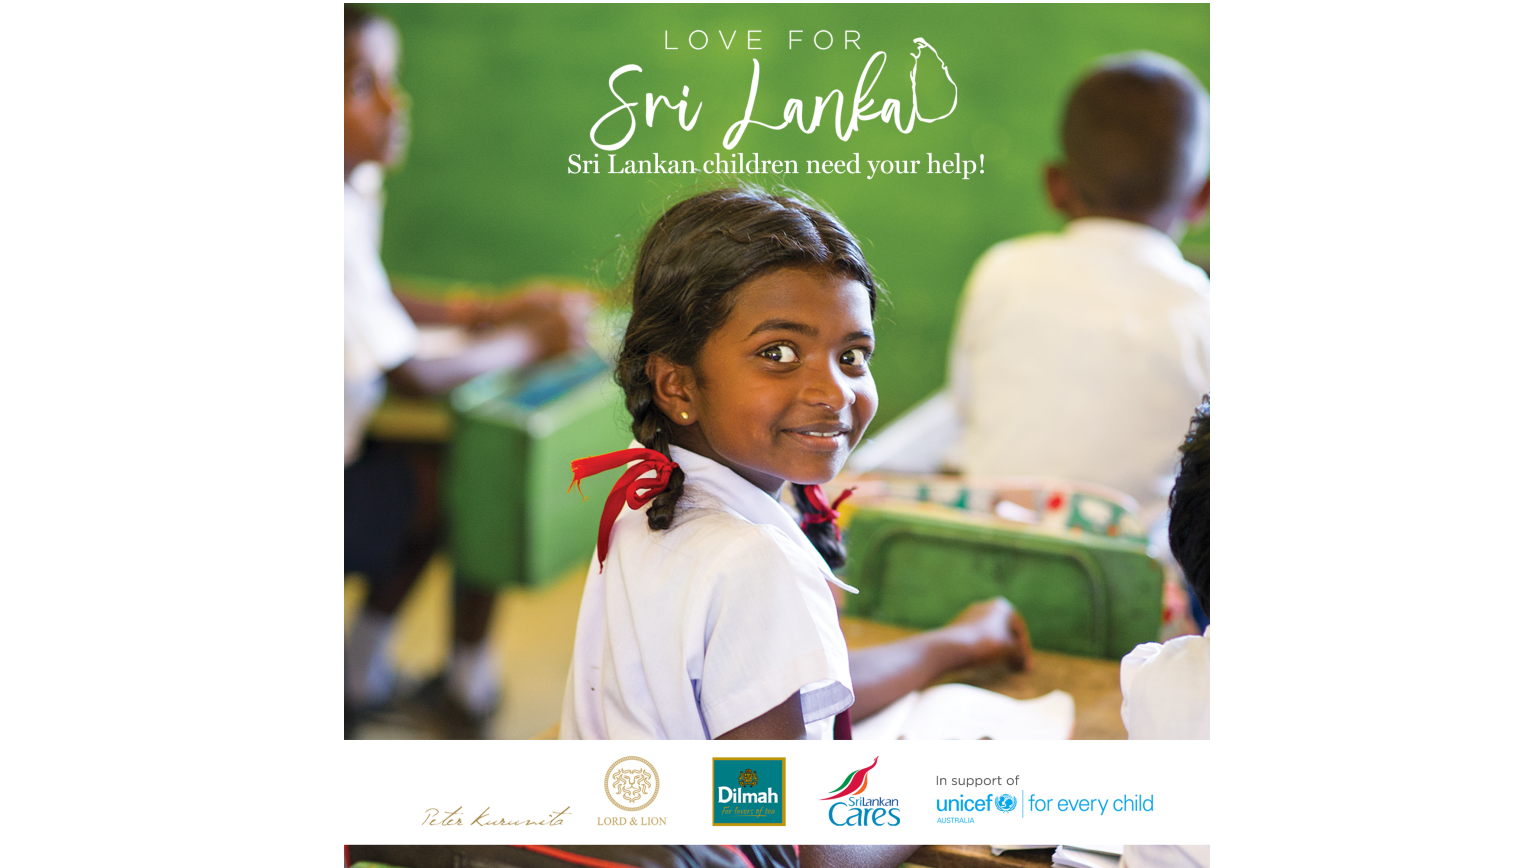 Sri Lankan children need your help!